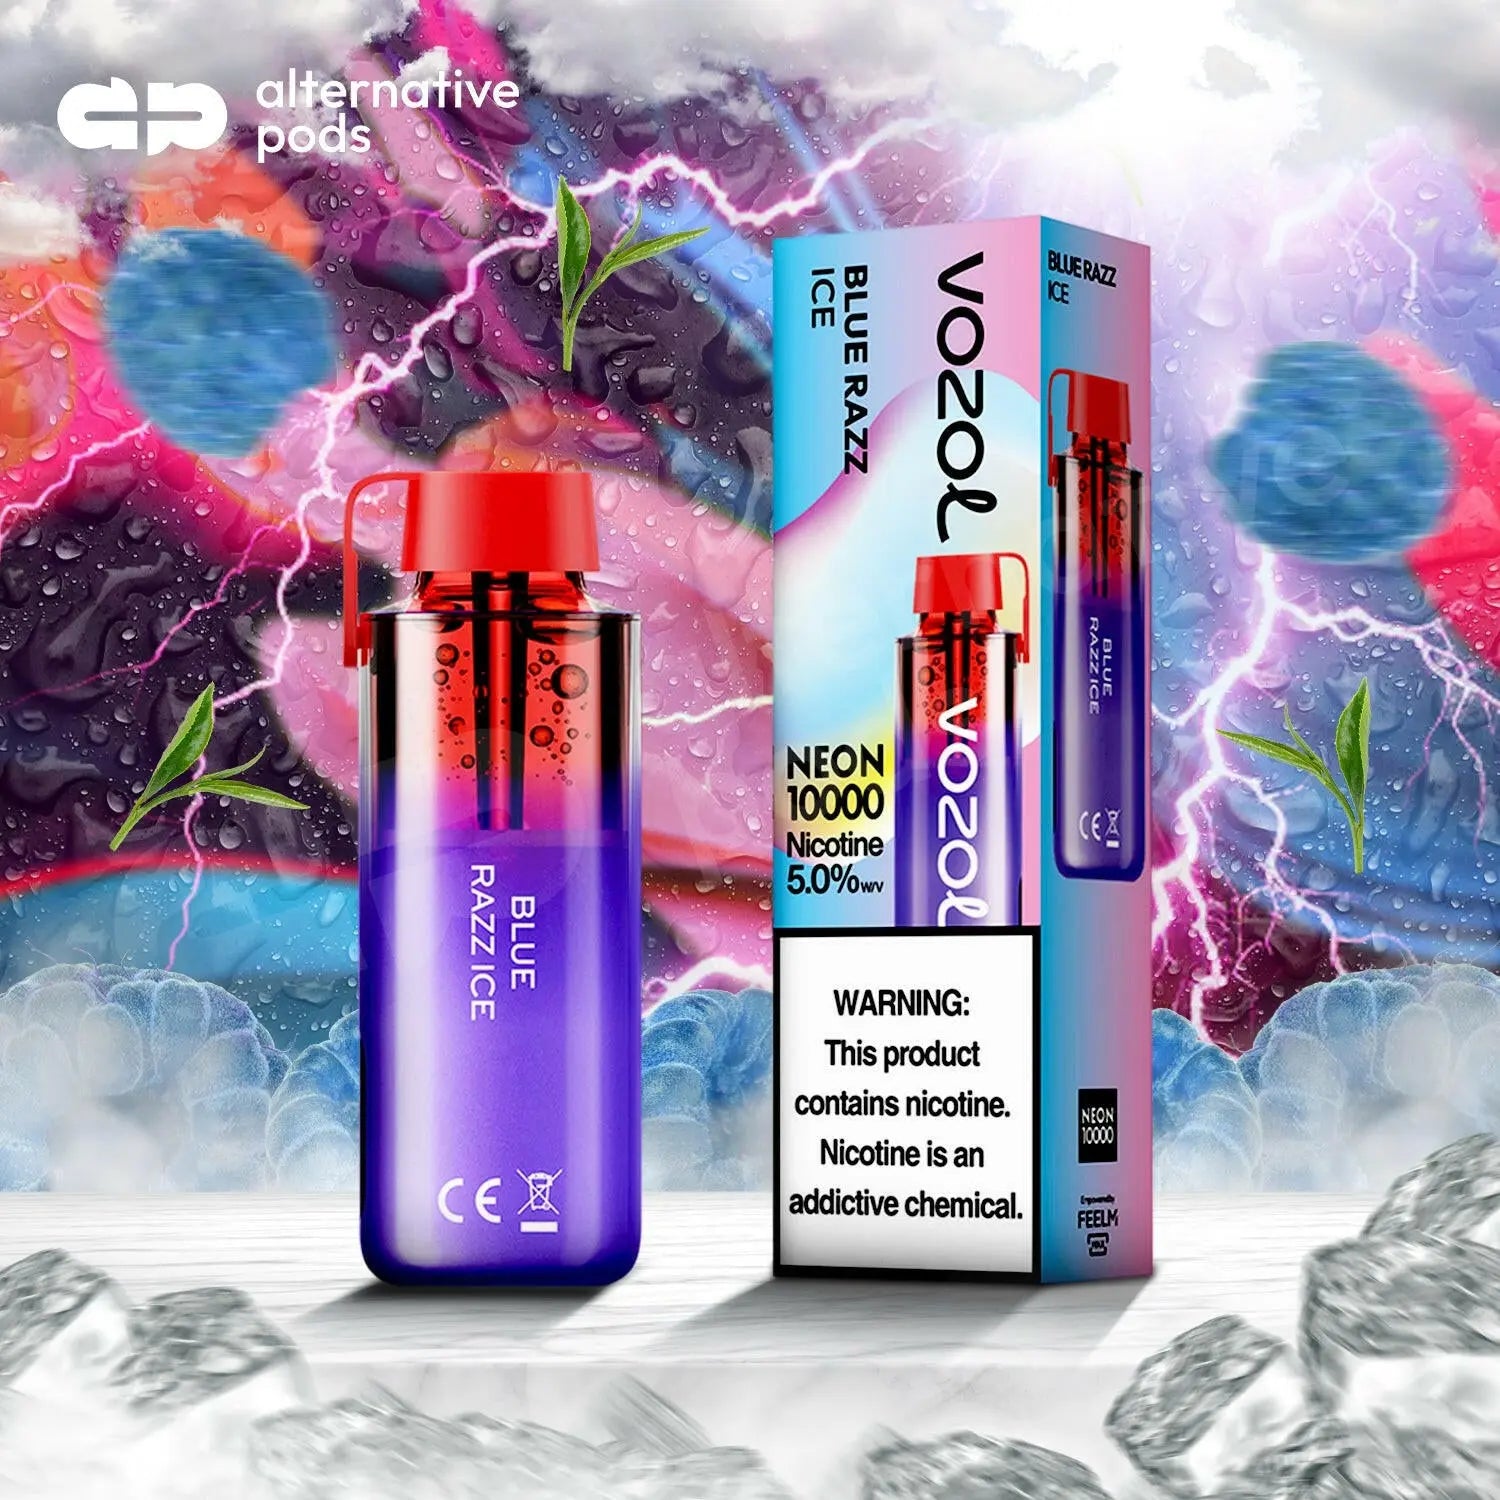 Vozol Neon 10000 - Alternative pods | Online Vape & Smoke Shop